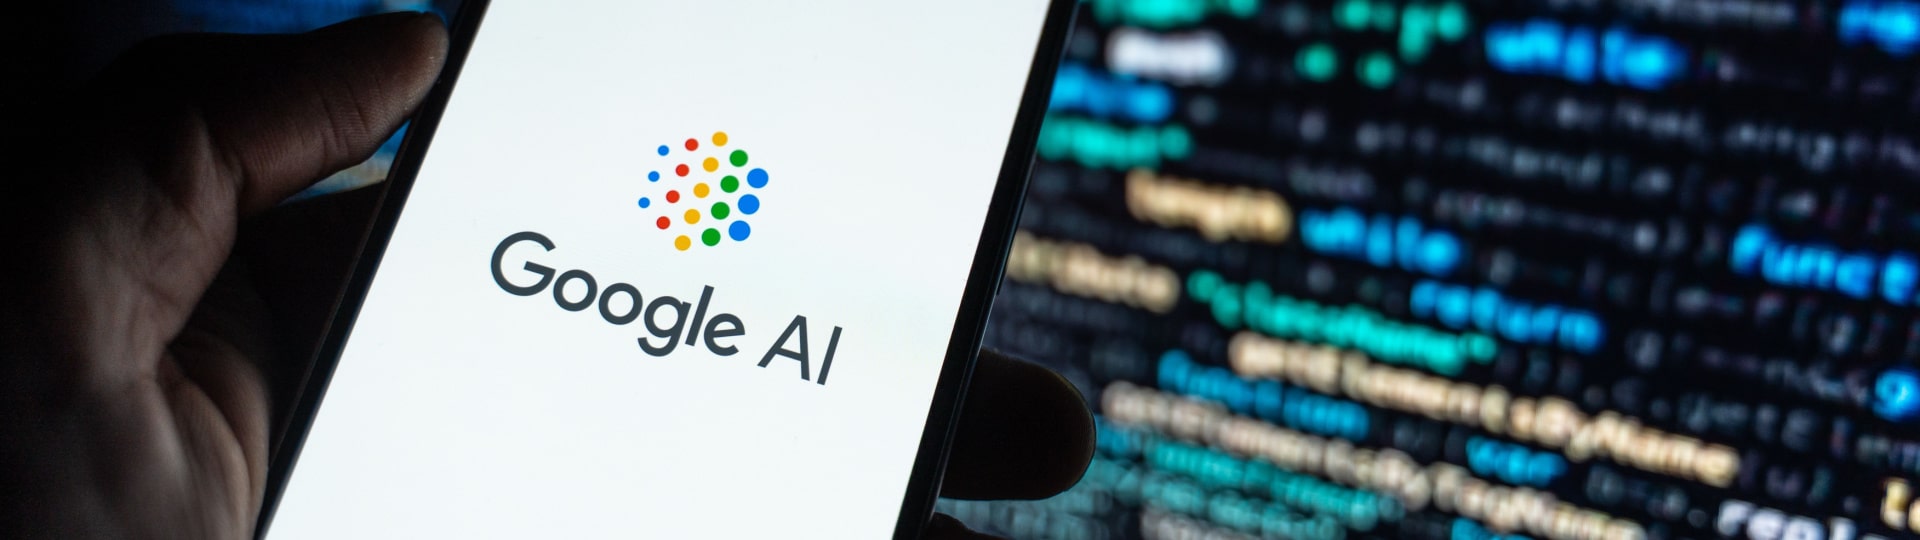 Google slíbil 25 milionů eur na podporu znalostí o AI v Evropě